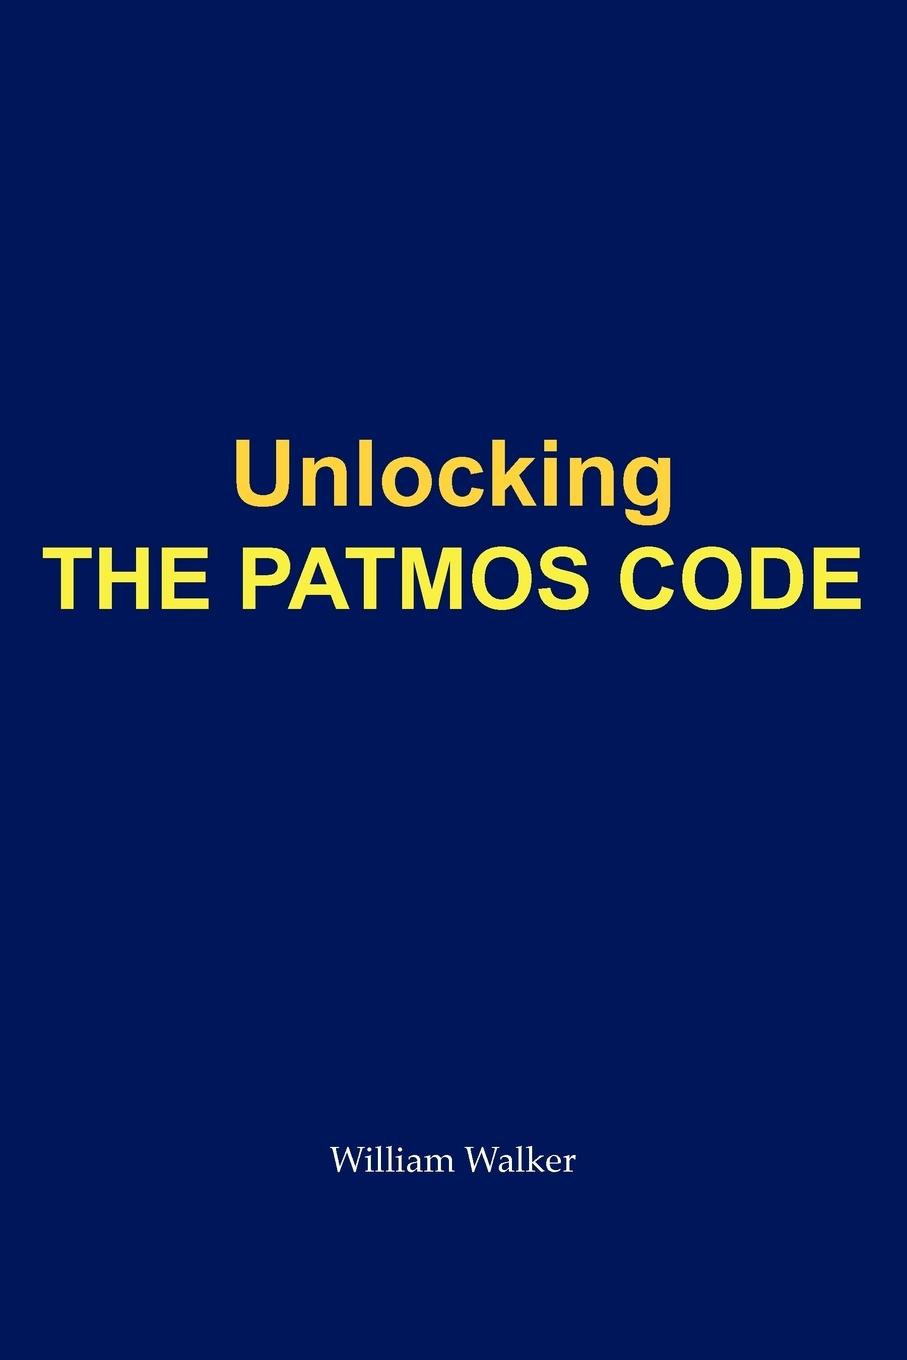 Unlocking the Patmos Code - William Walker, Walker|William Walker